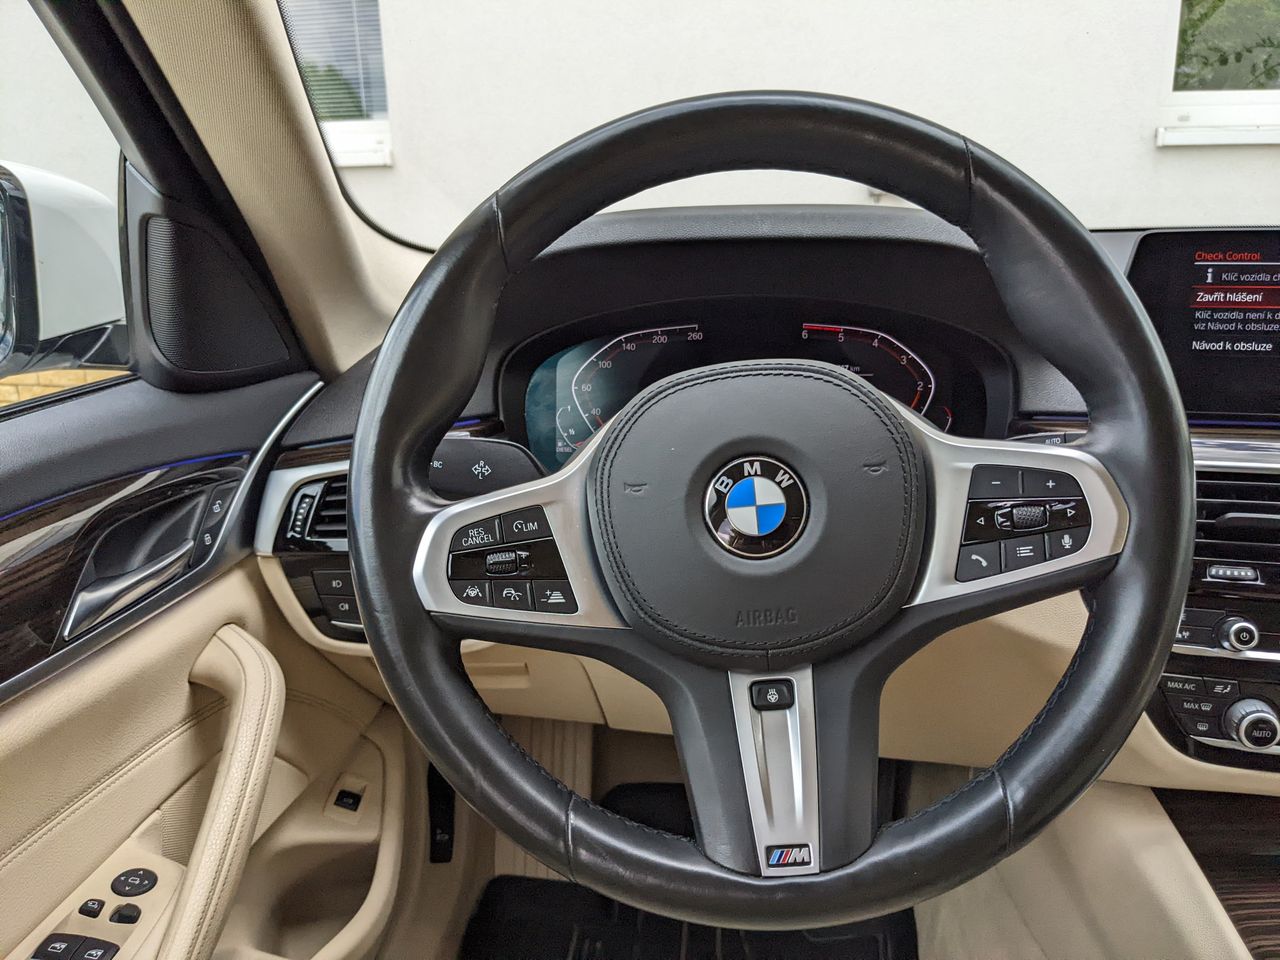 BMW 520d xDrive Touring Live Cockpit Driving Assistant Professional